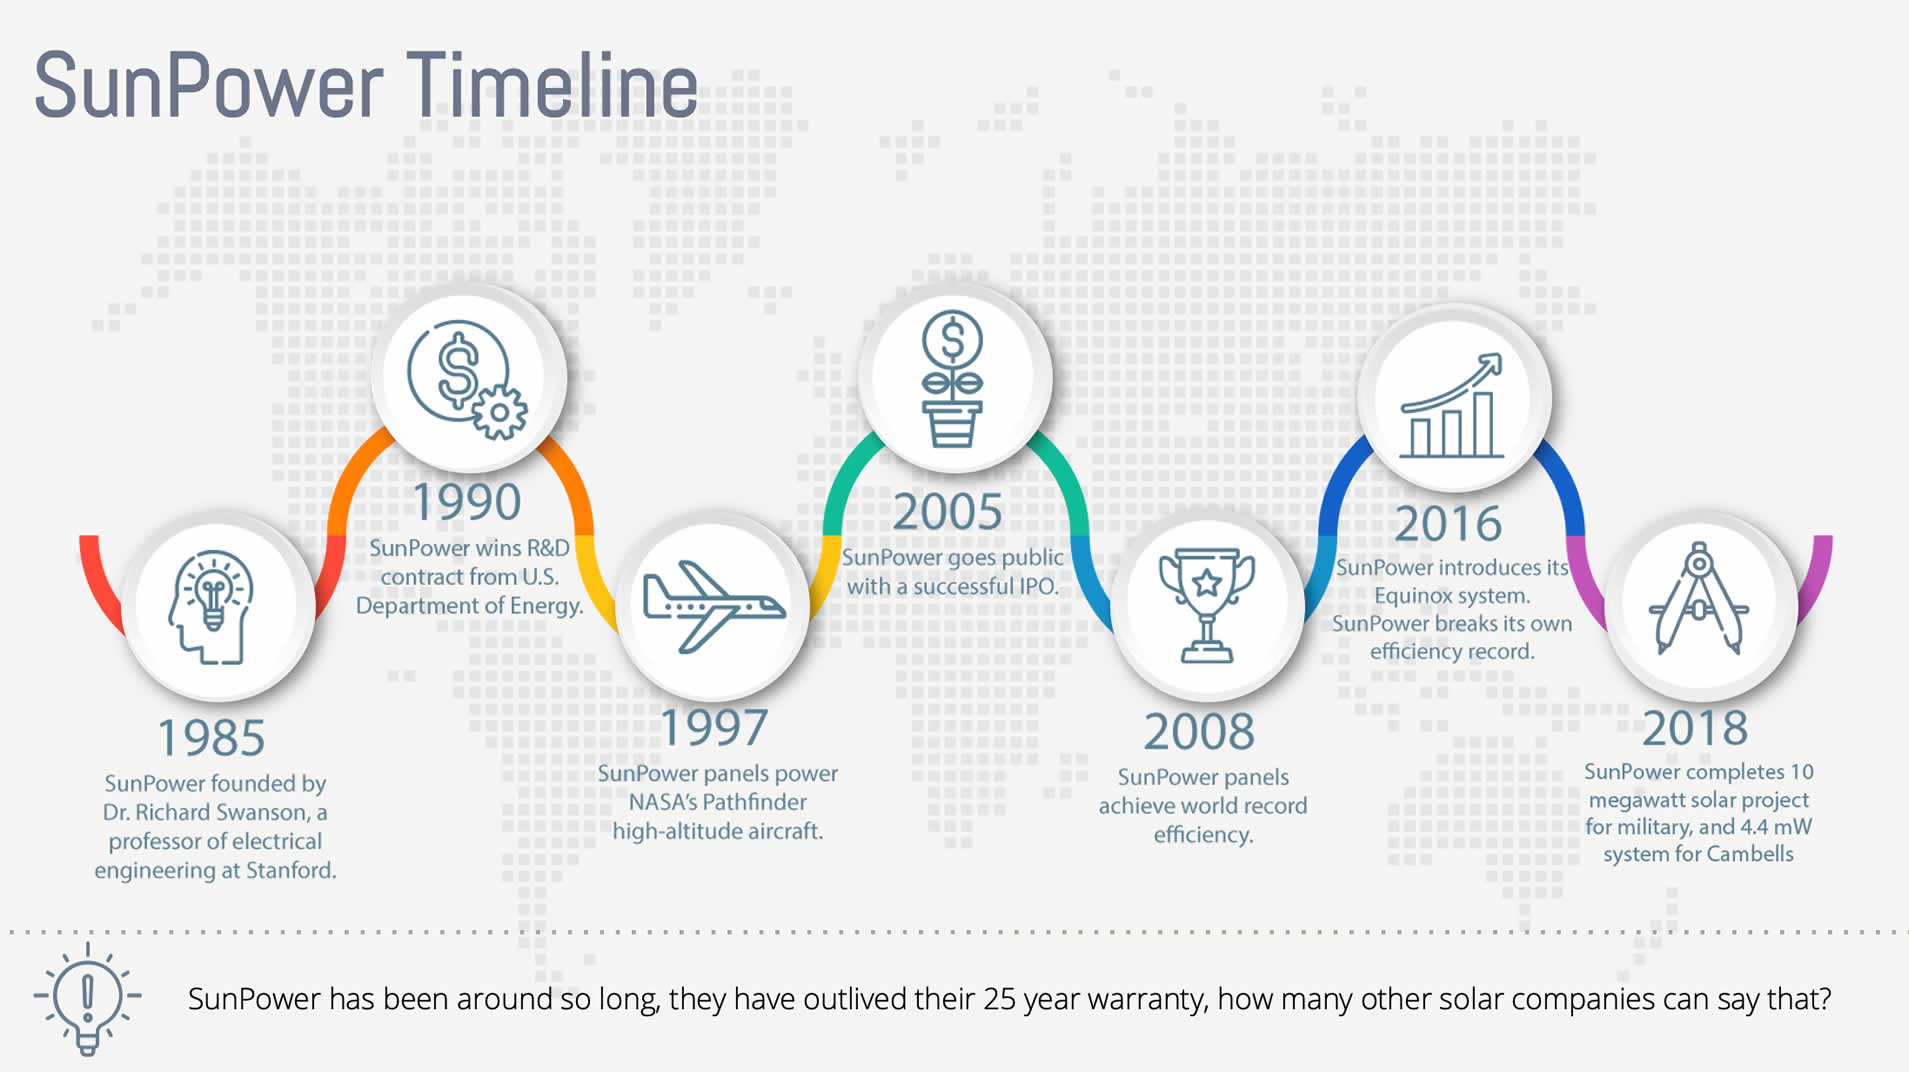 SunPower Timeline from 1985-2018